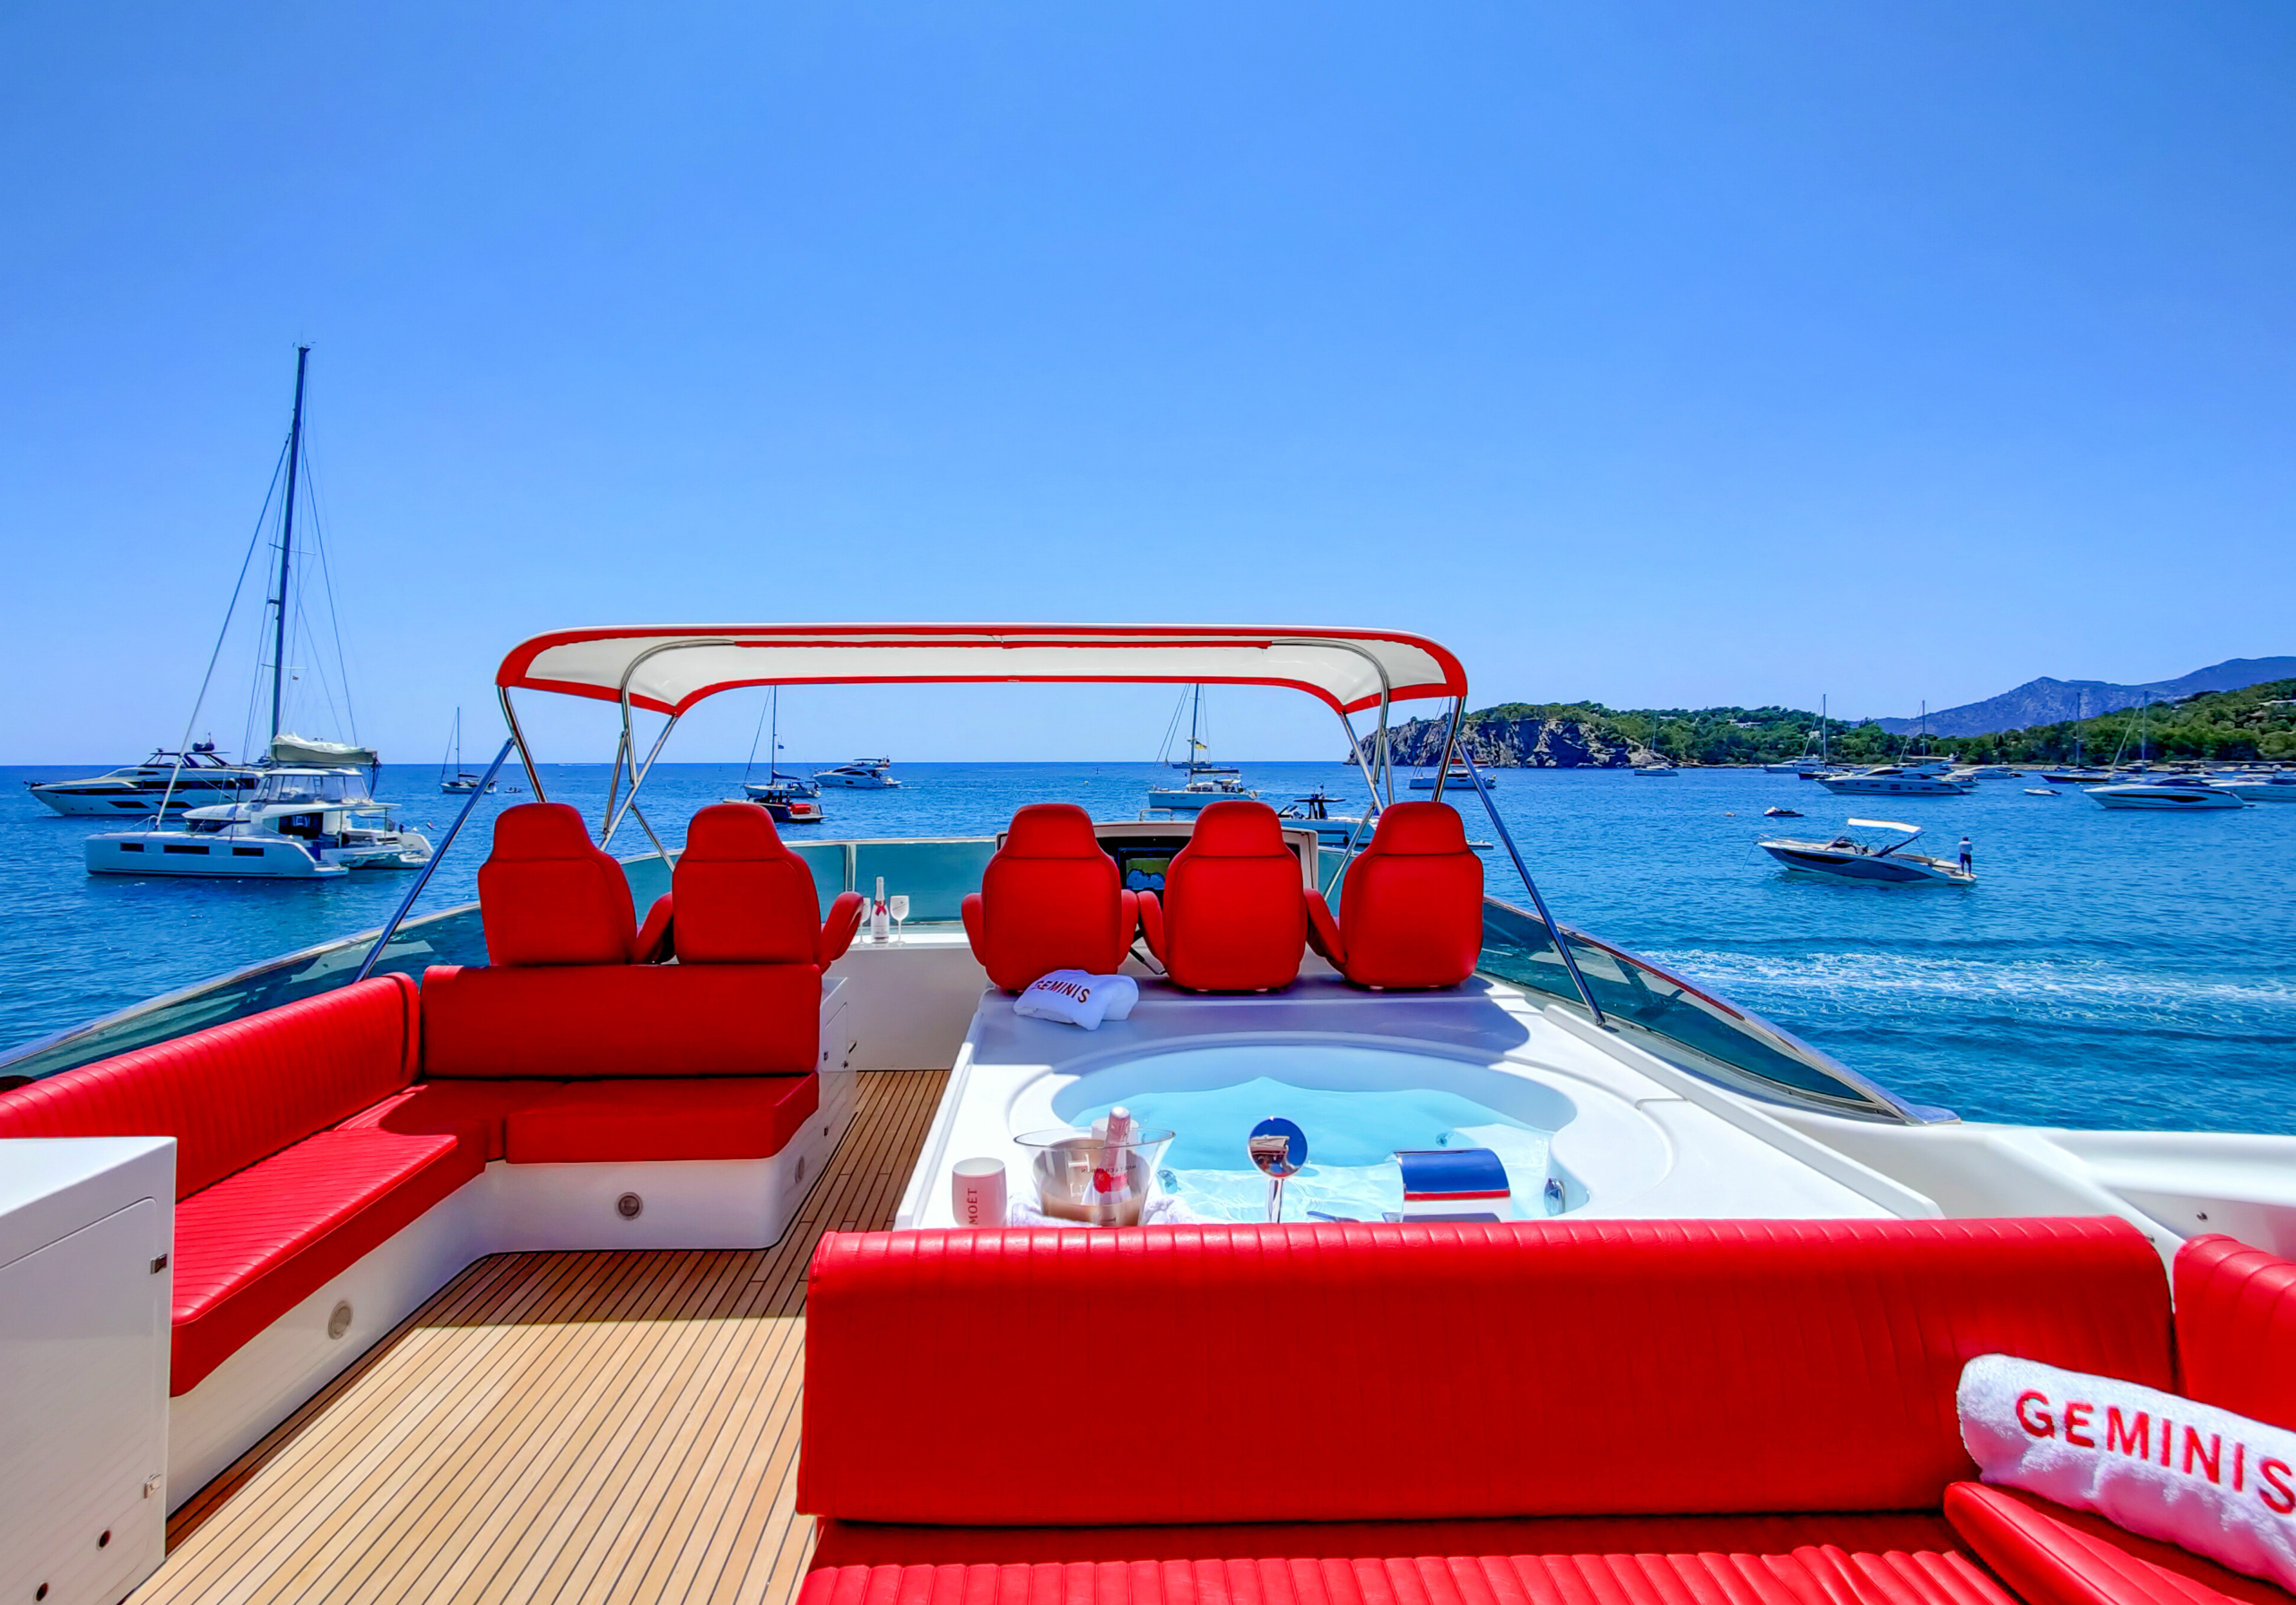 Geminis-Astondoa-Yacht-For-Charter-Sun-Deck